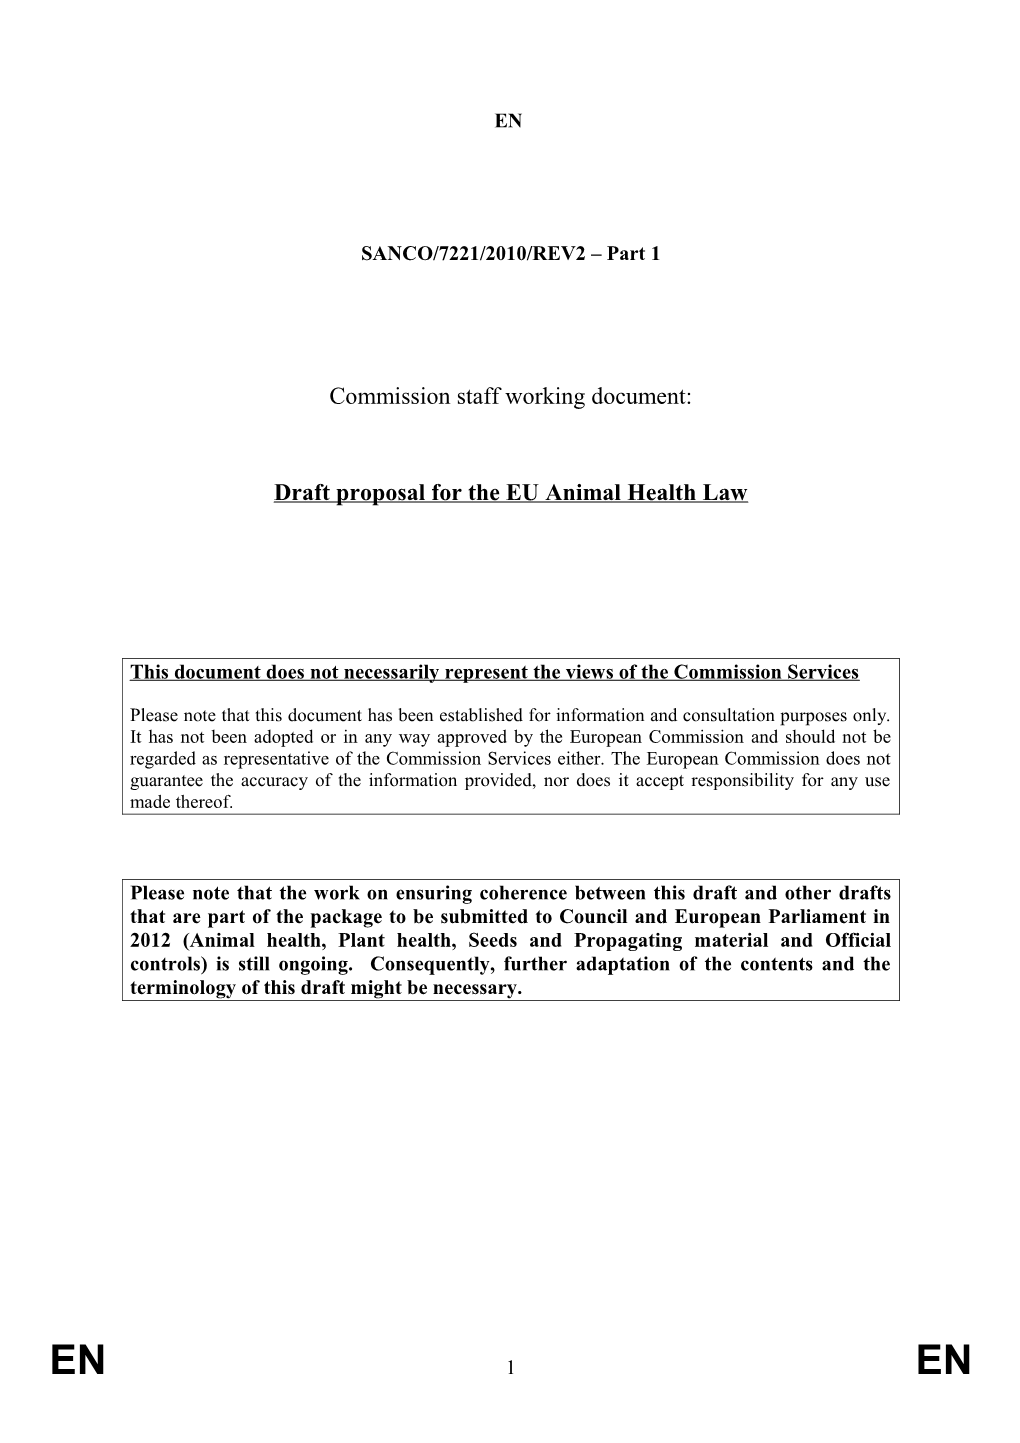 Draft Proposal for the EU Animal Health Law